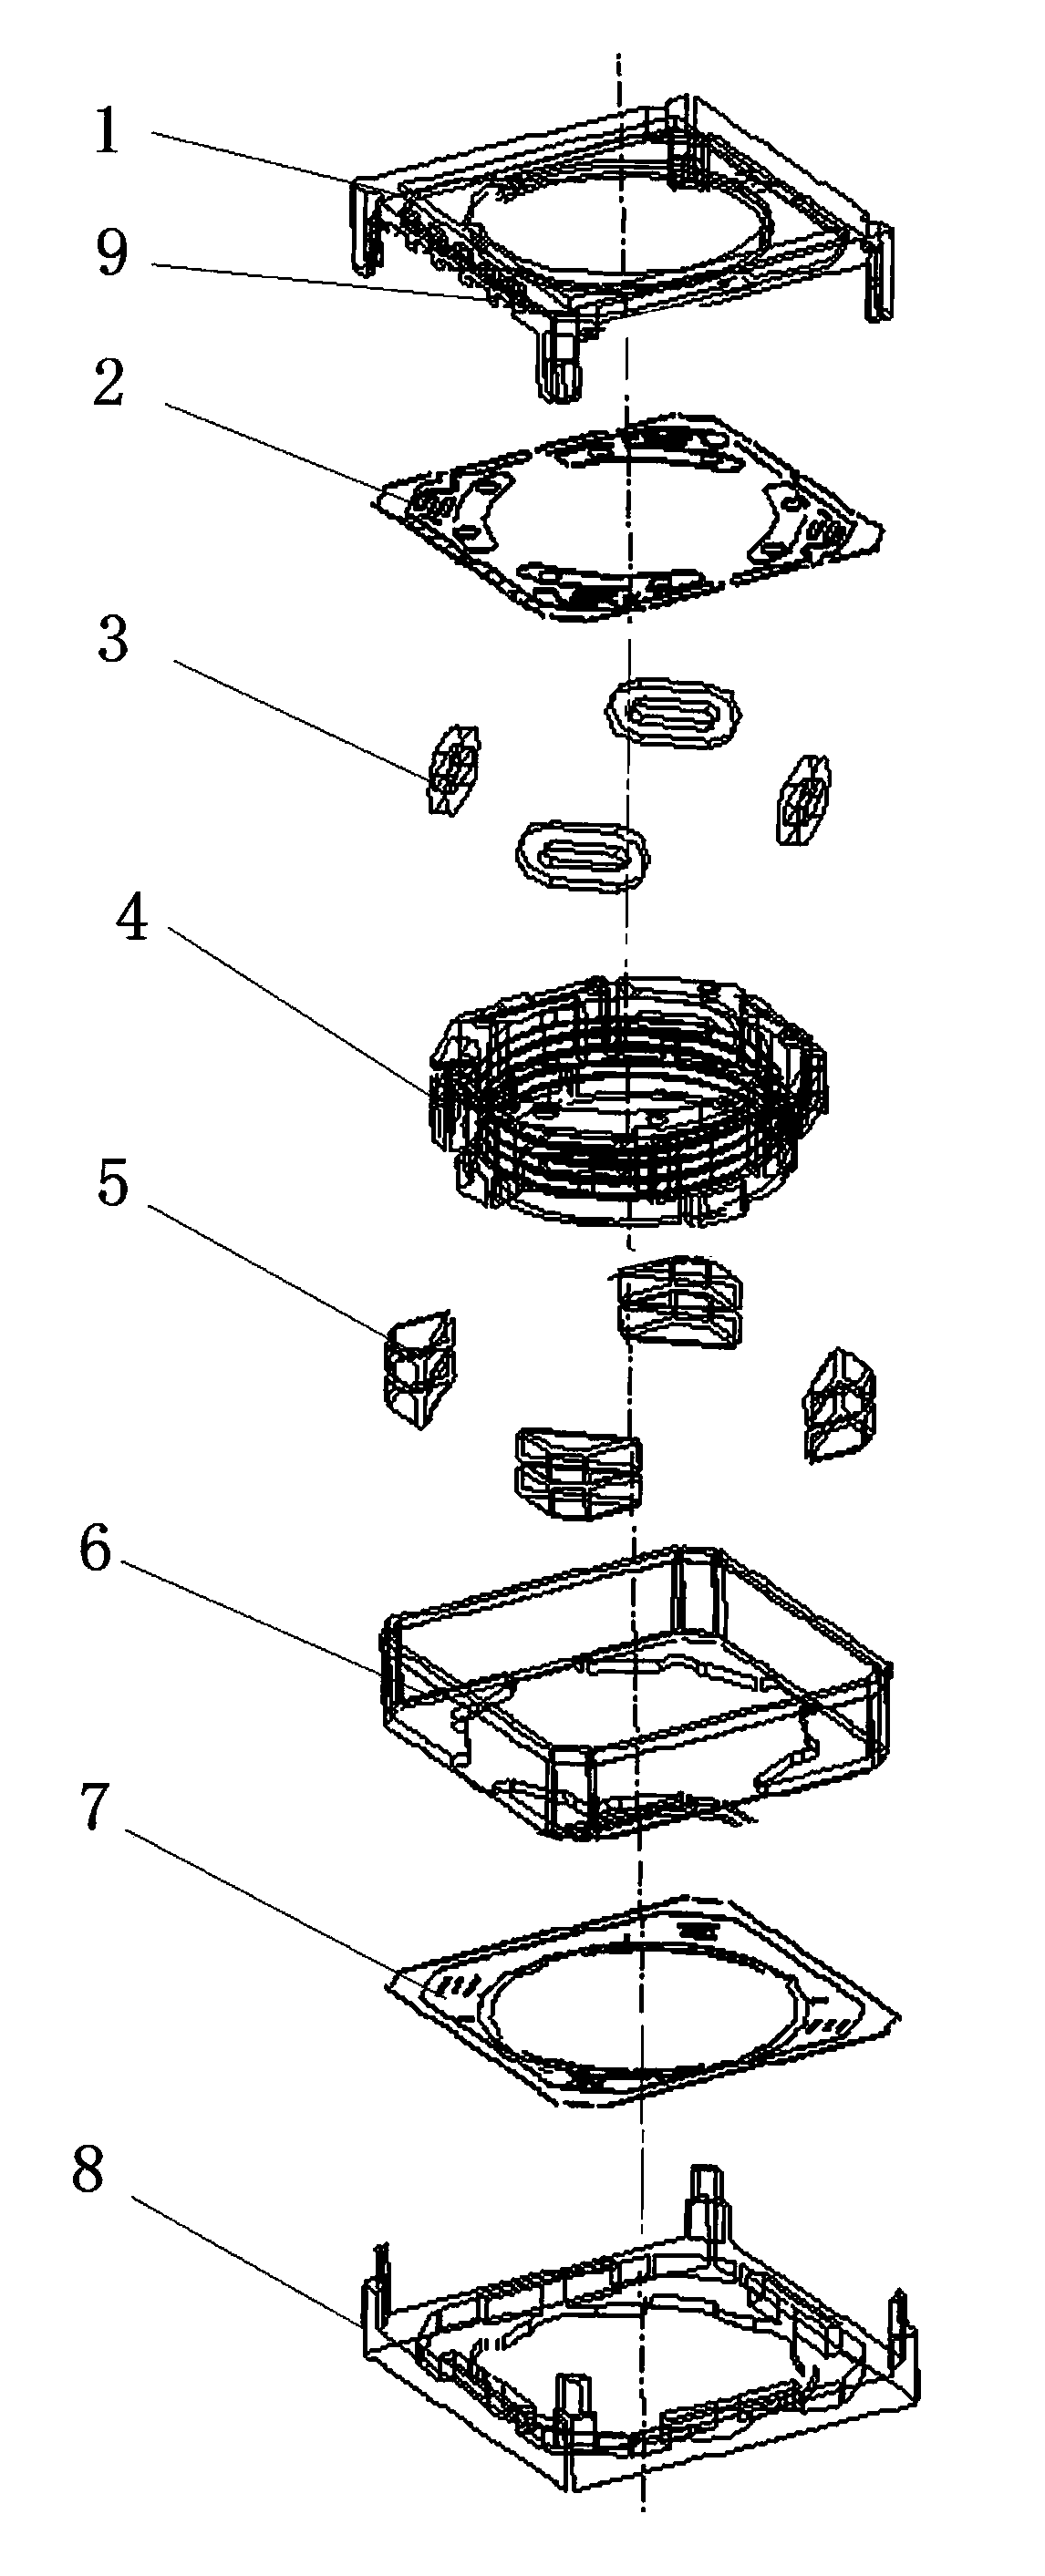 Optical anti-vibration motor